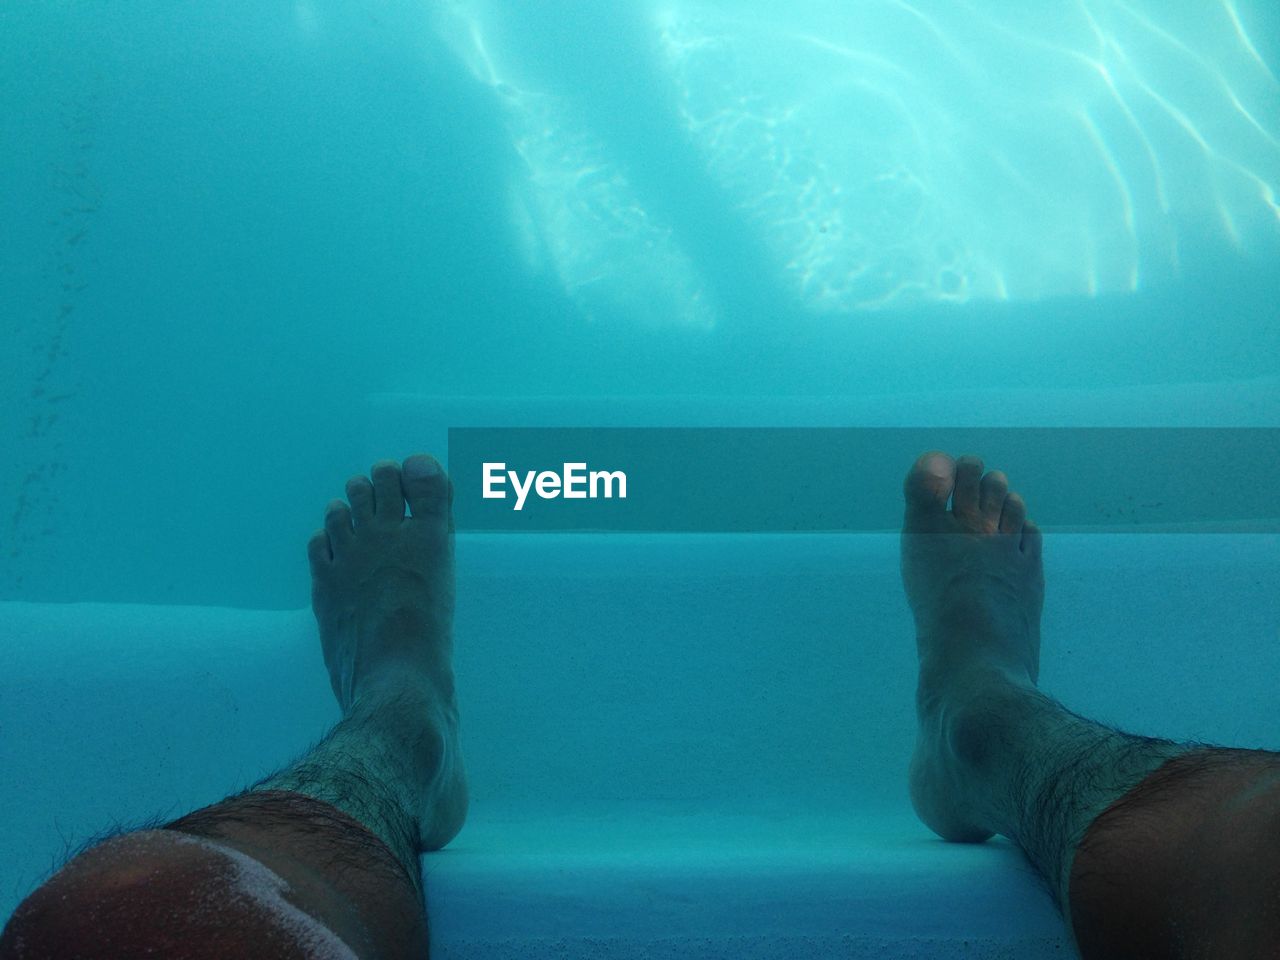 Human legs in water